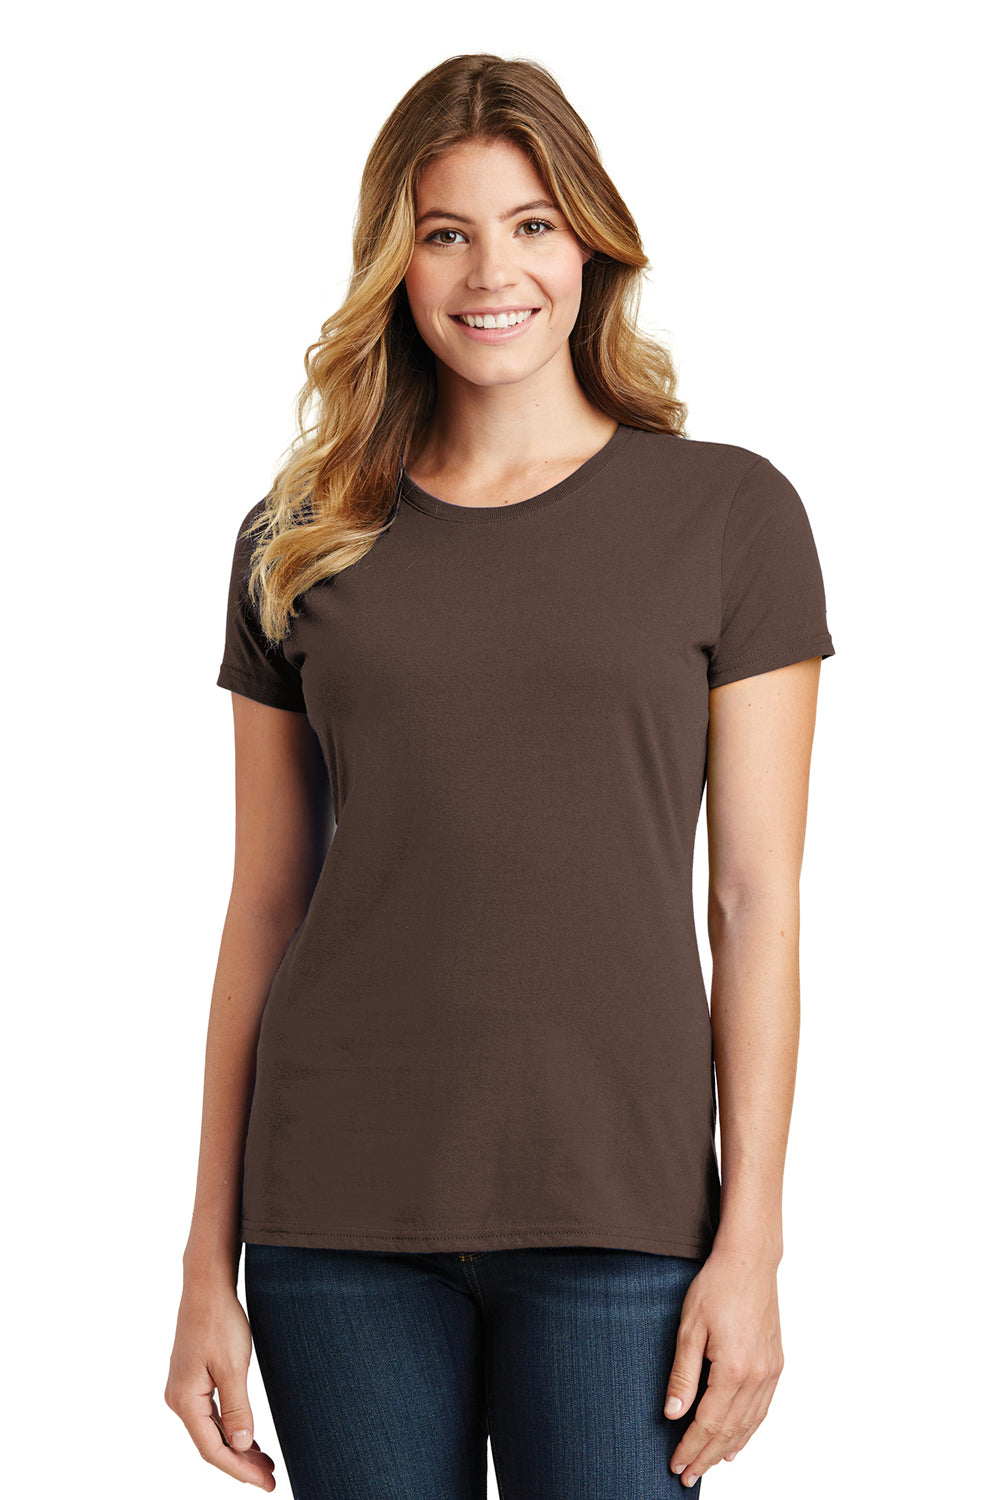 Port & Company LPC450 Womens Fan Favorite Short Sleeve Crewneck T-Shirt Dark Chocolate Brown Front